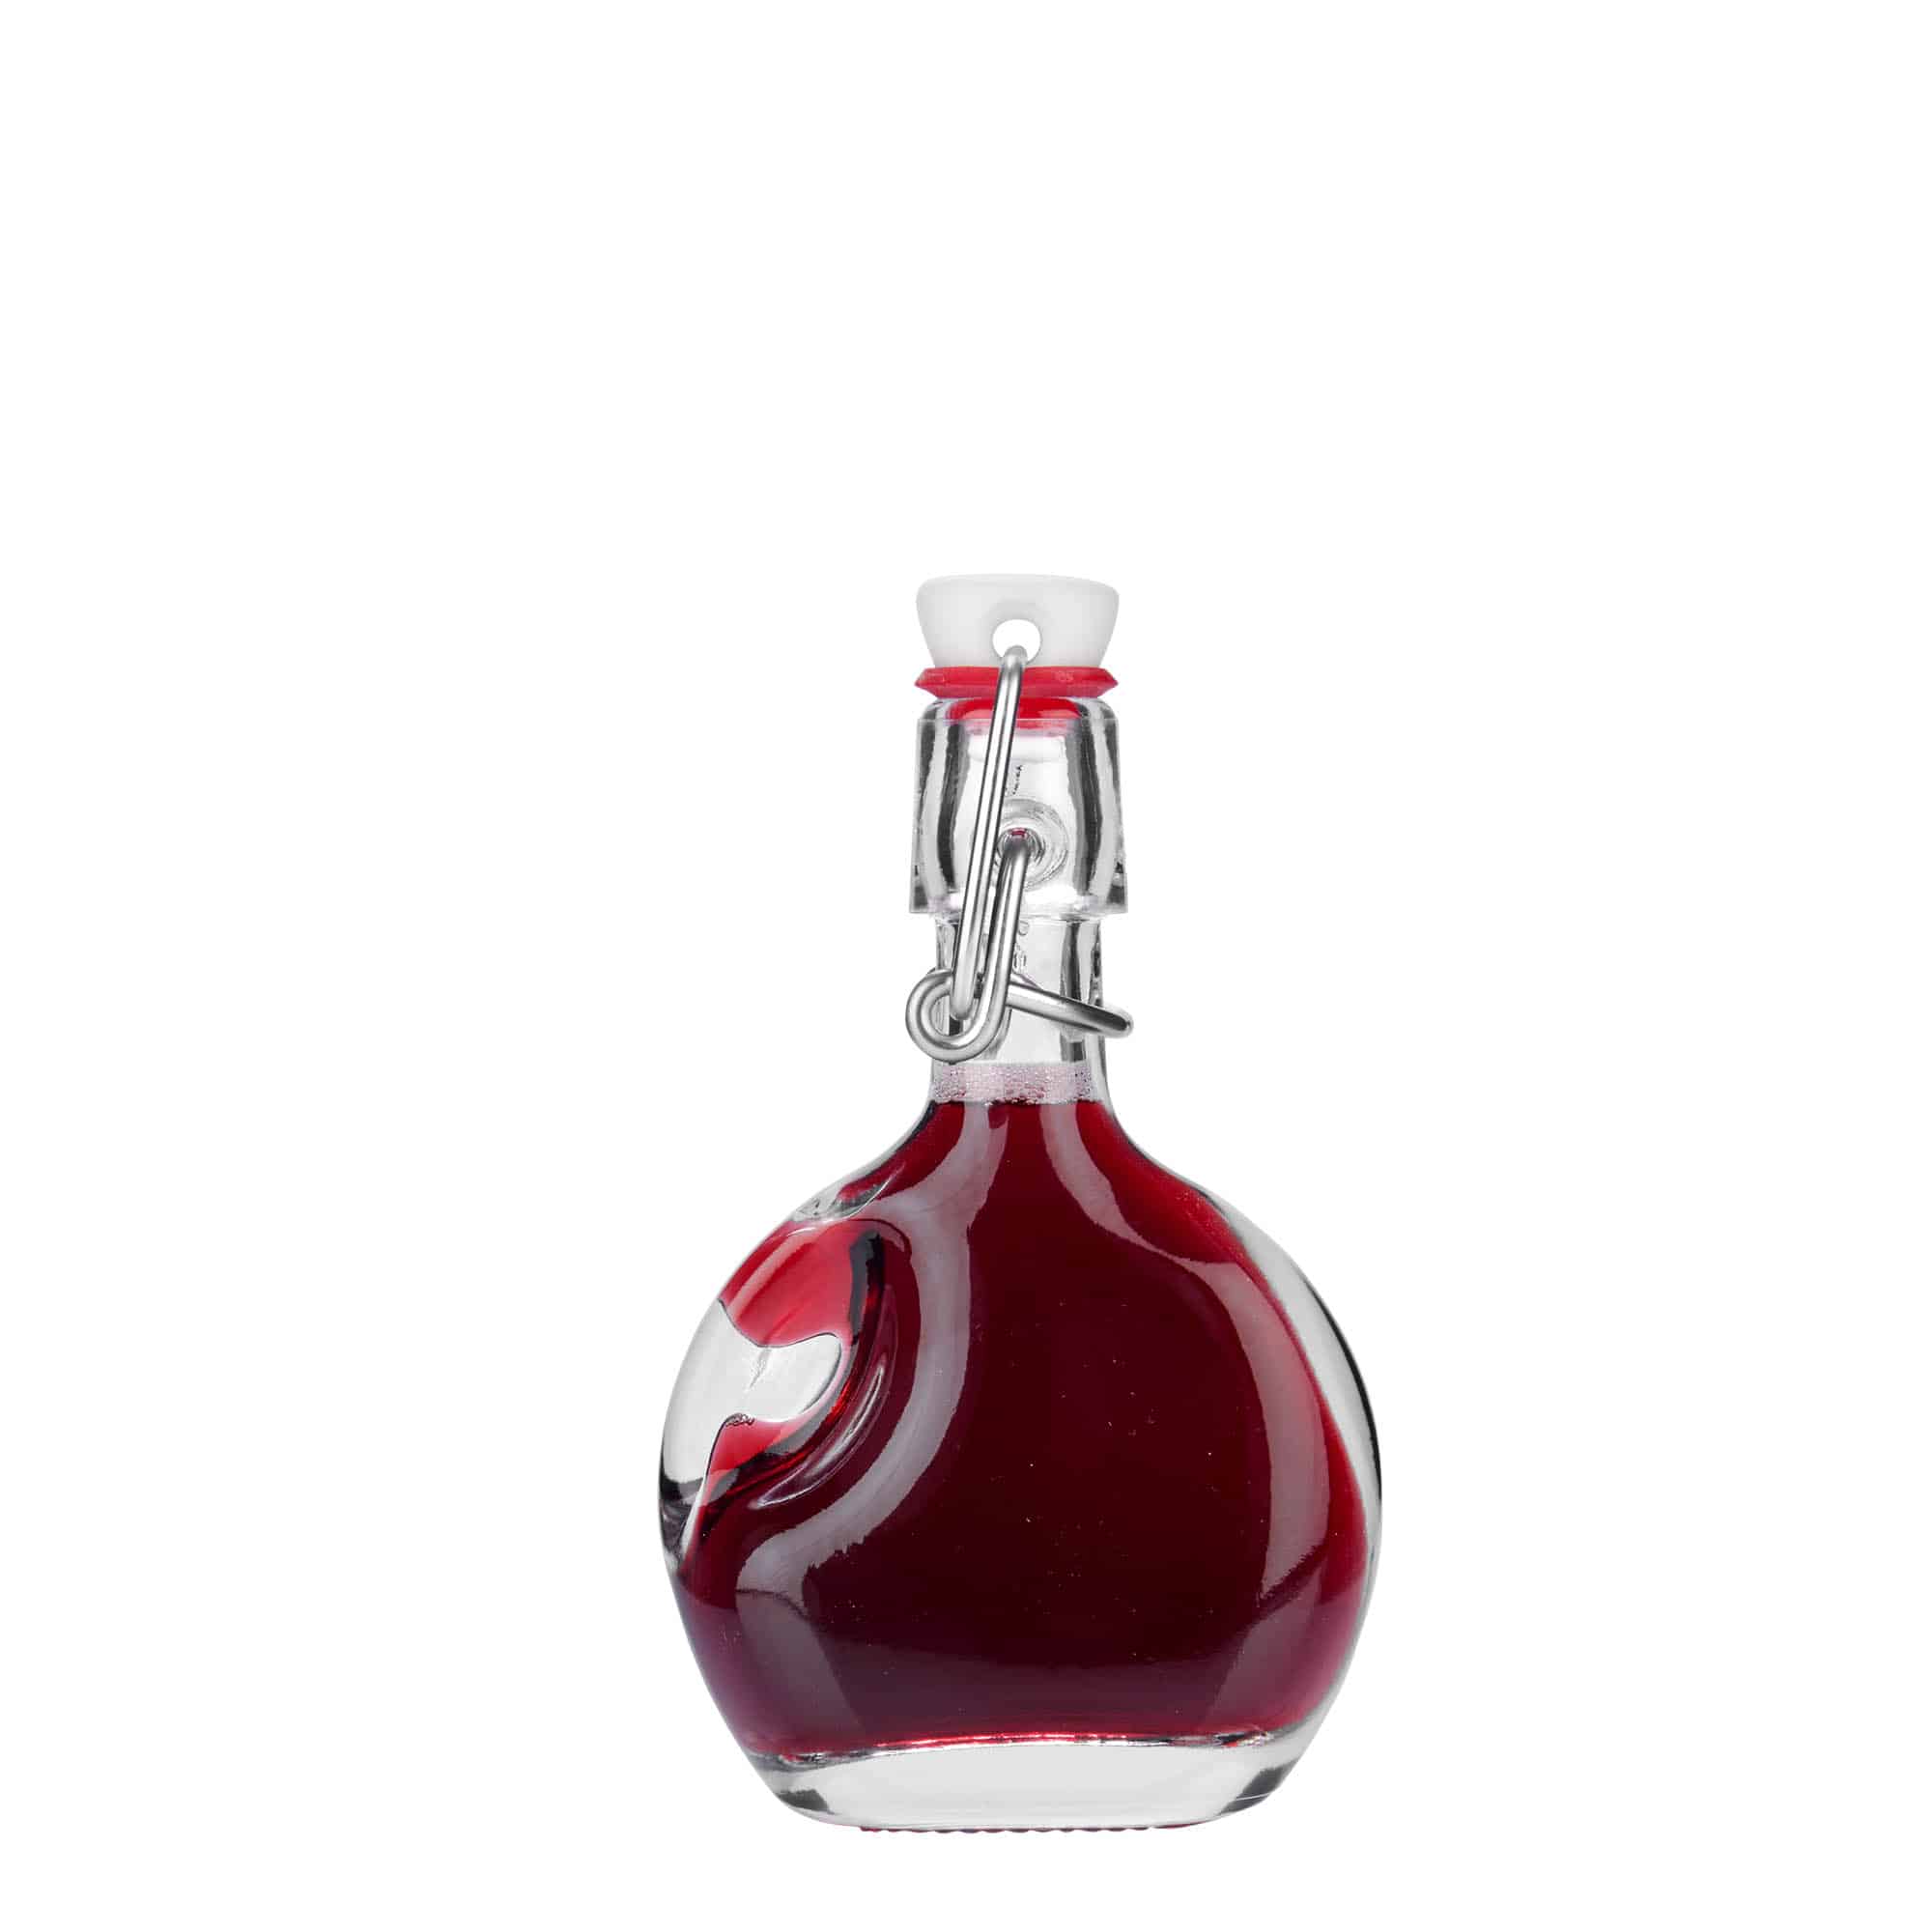 40 ml Glasflasche 'Lukas', oval, Mündung: Bügelverschluss